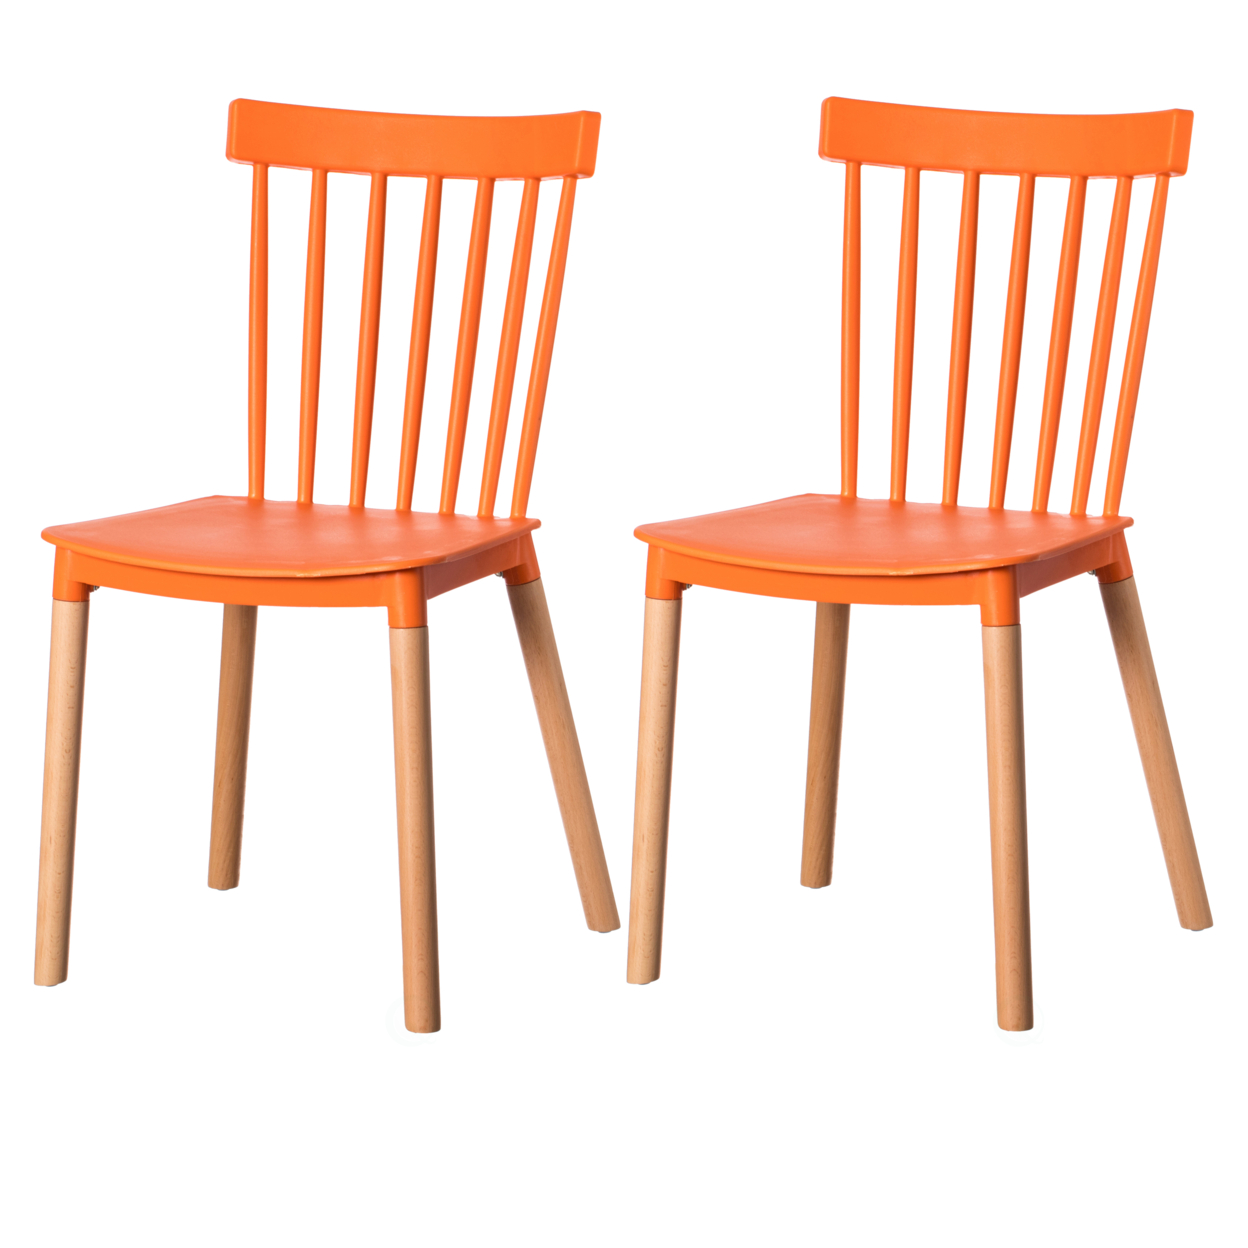 Modern Plastic Dining Chair Windsor Design With Beech Wood Legs - Single Orange